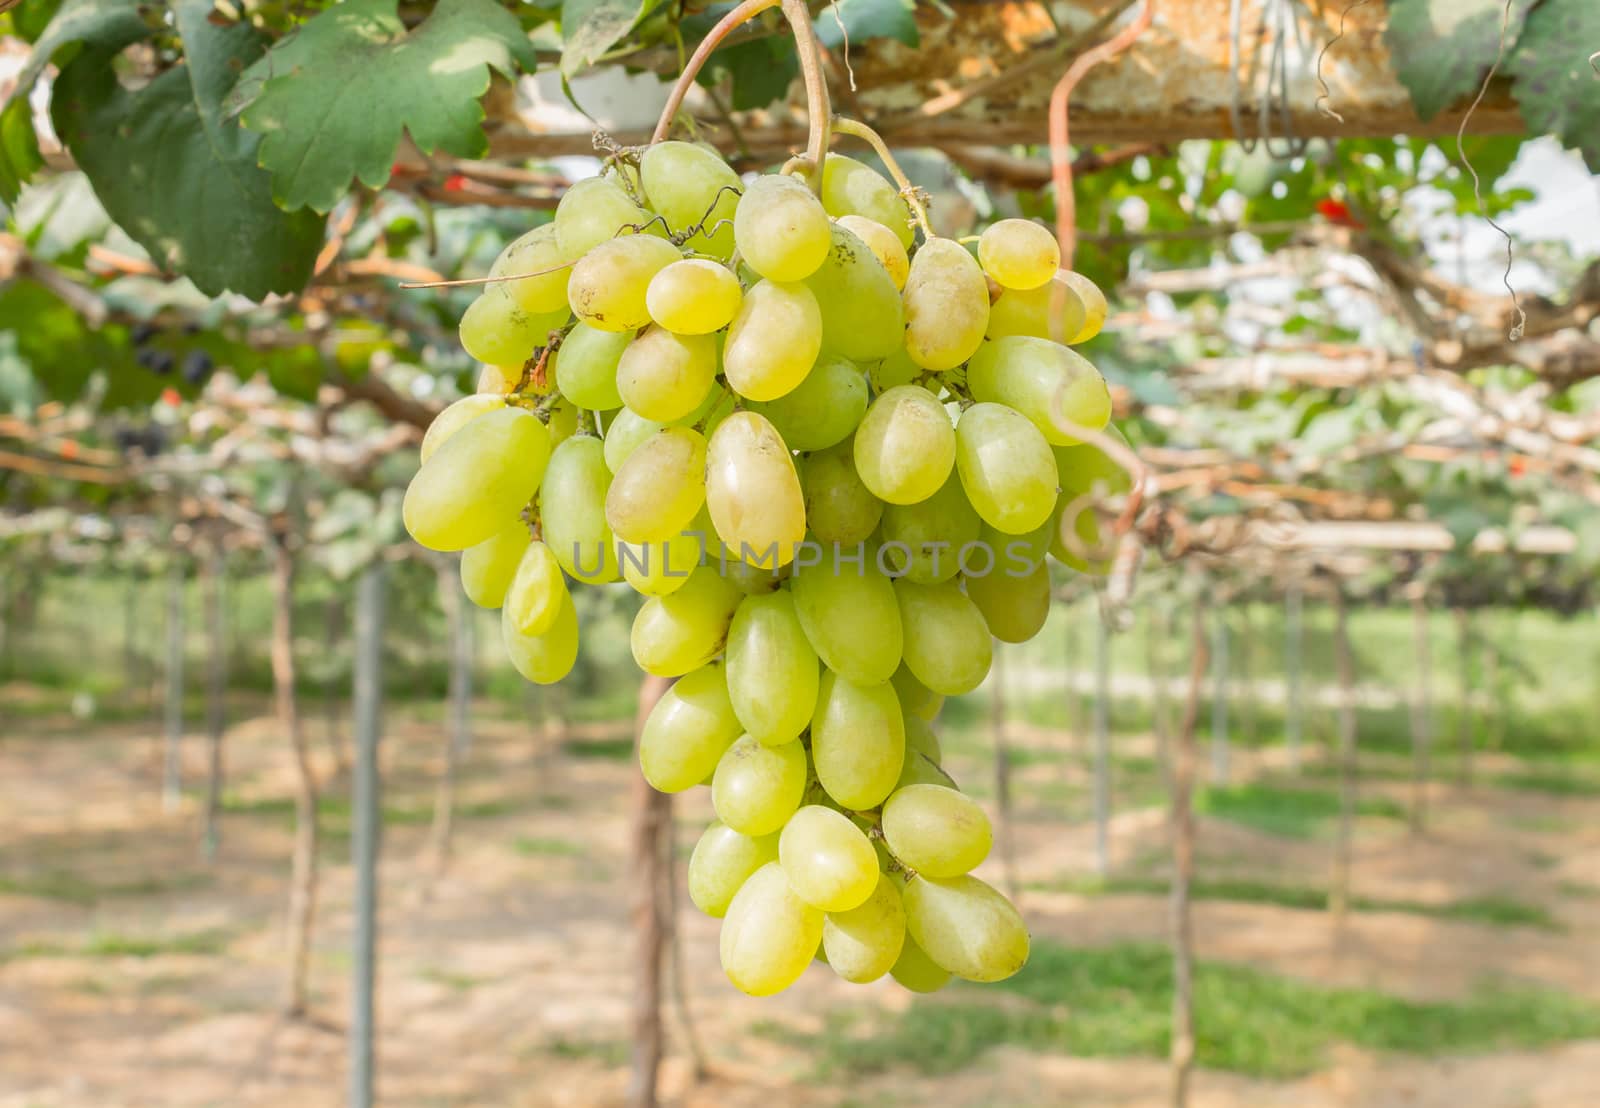 Green grapes in grape garden or vineyard. Green grapes with green leaf. Green grape vineyard in sunshine day. Ripe green grape for health or diet center position